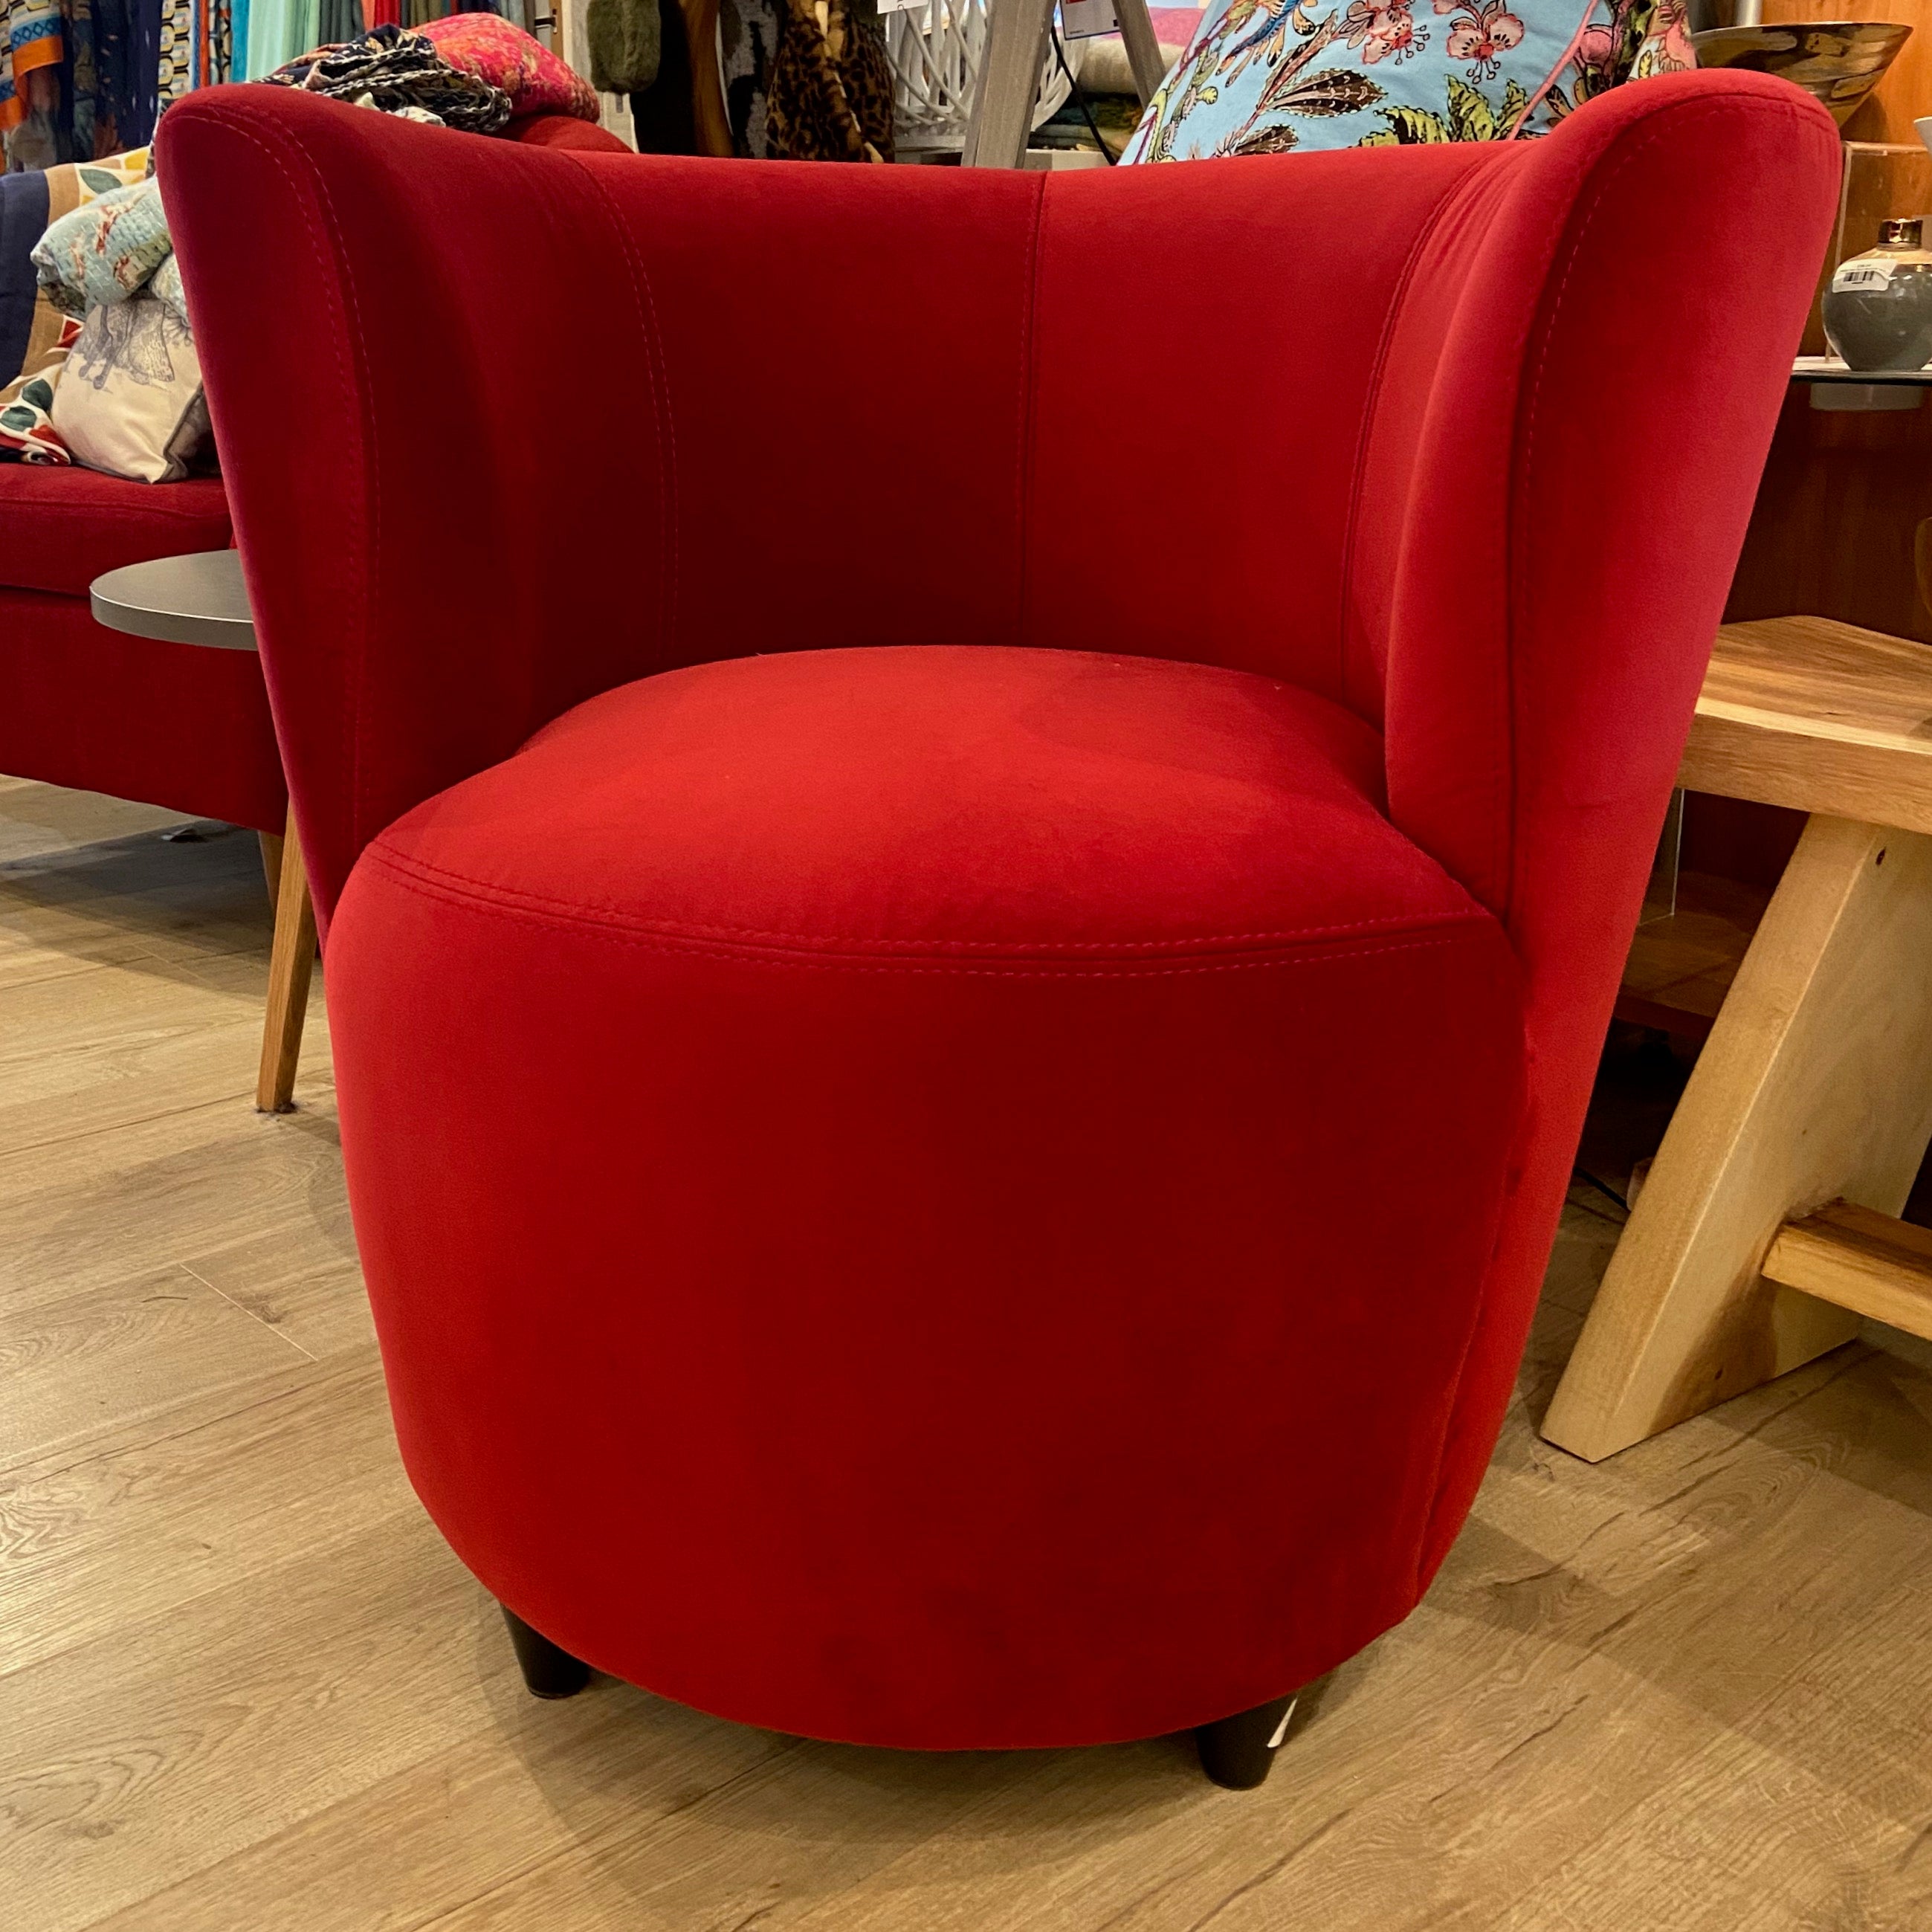 Berry Hugo Chair last one in stock - The Nancy Smillie Shop - Art, Jewellery & Designer Gifts Glasgow